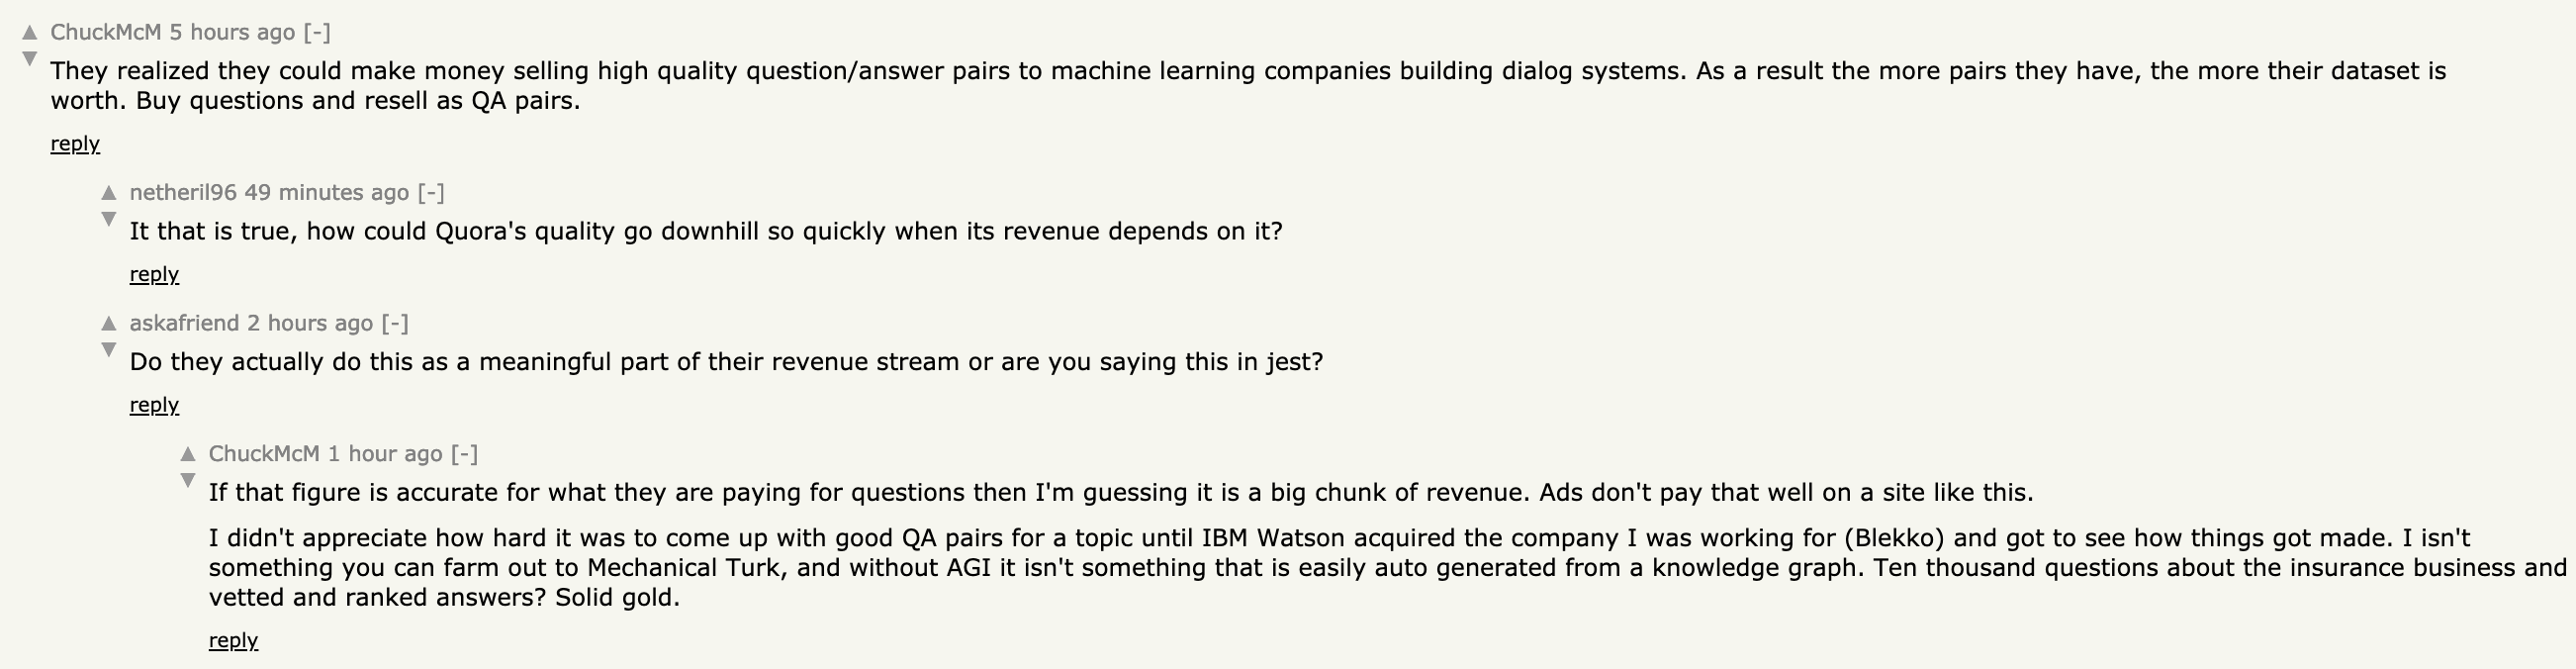 Hacker News thread about Quora's revenue model